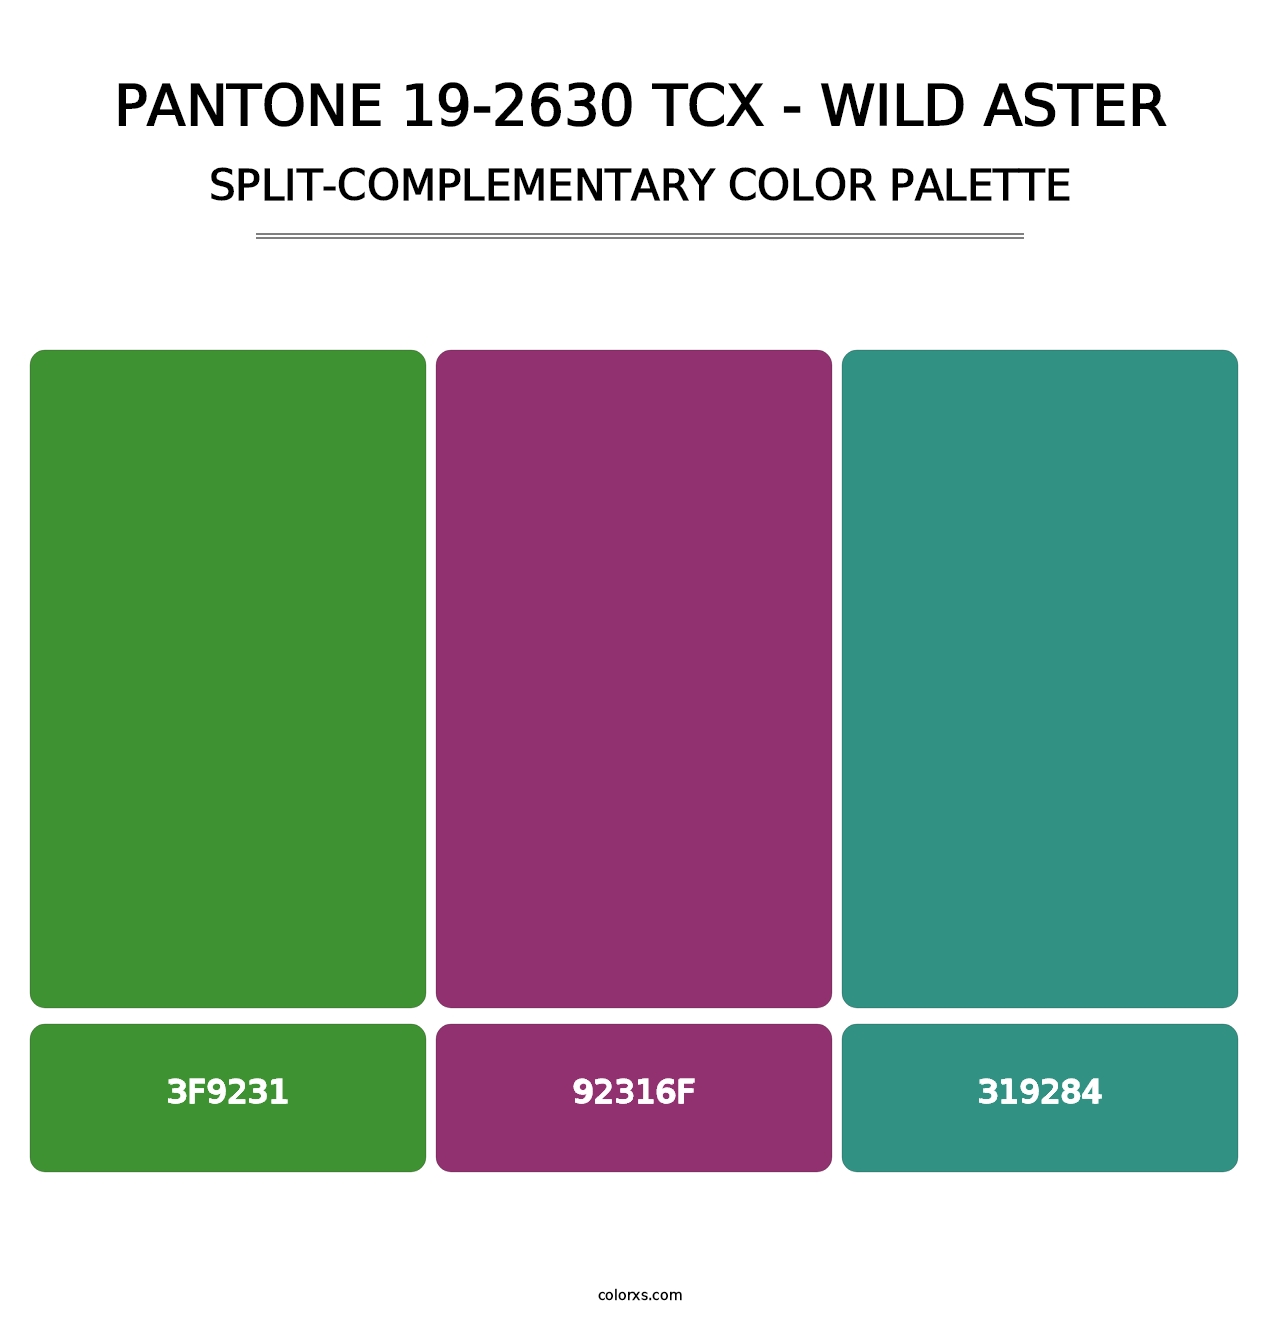 PANTONE 19-2630 TCX - Wild Aster - Split-Complementary Color Palette